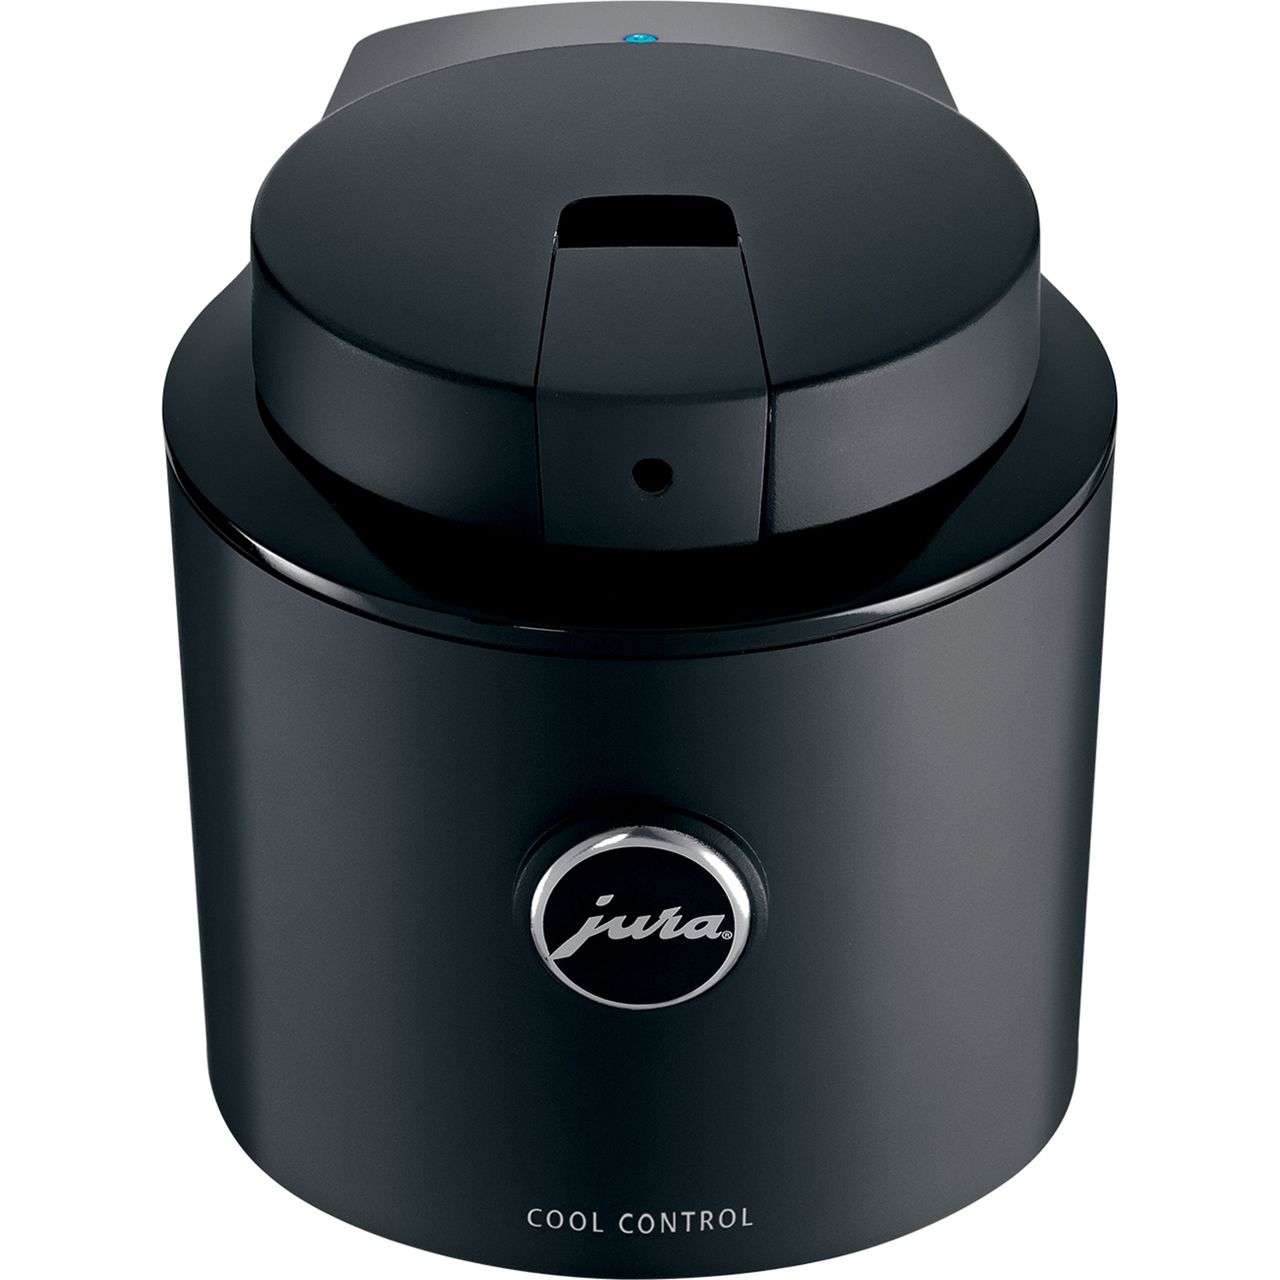 Jura Cool Control Basic 69294 Milk Cooler Review